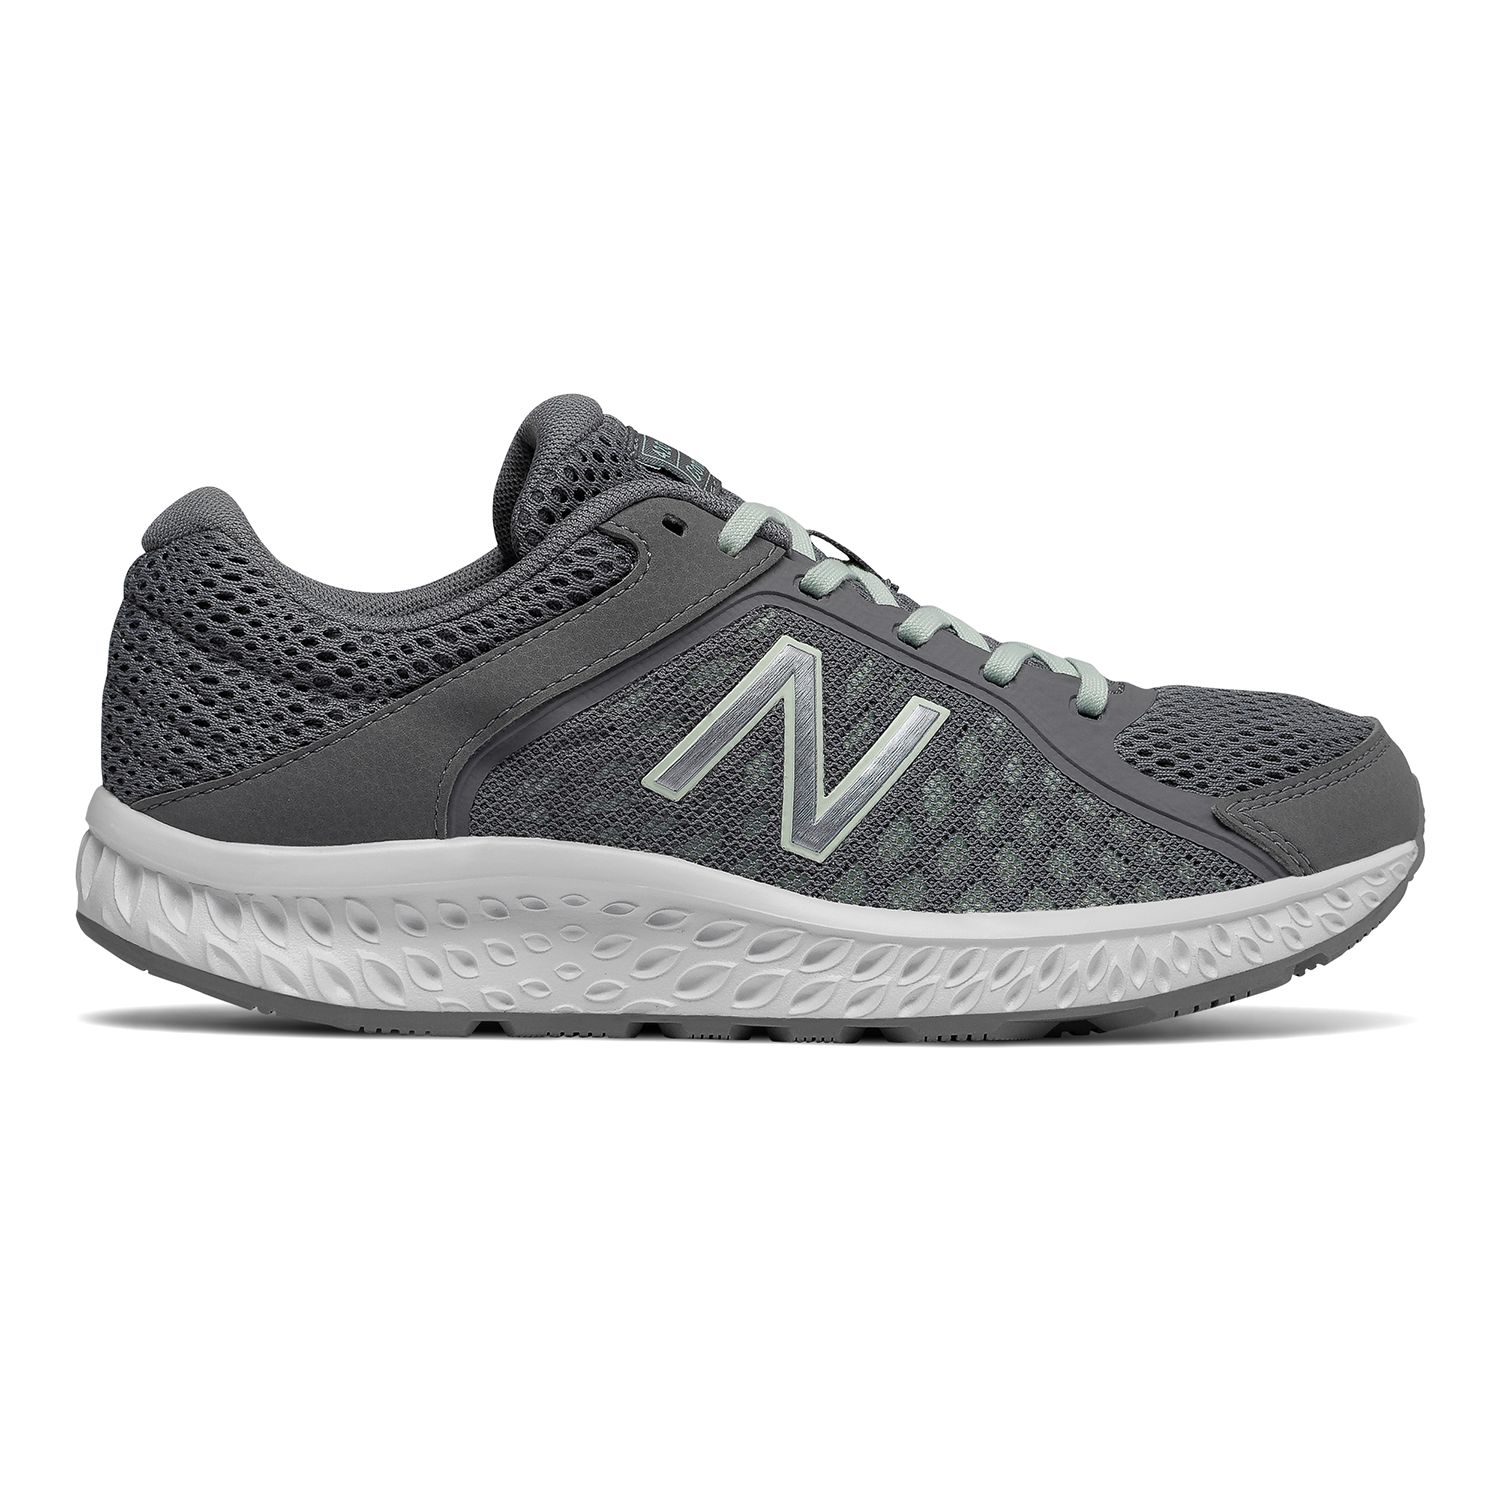 New Balance 420 v4 Women's Running Shoes